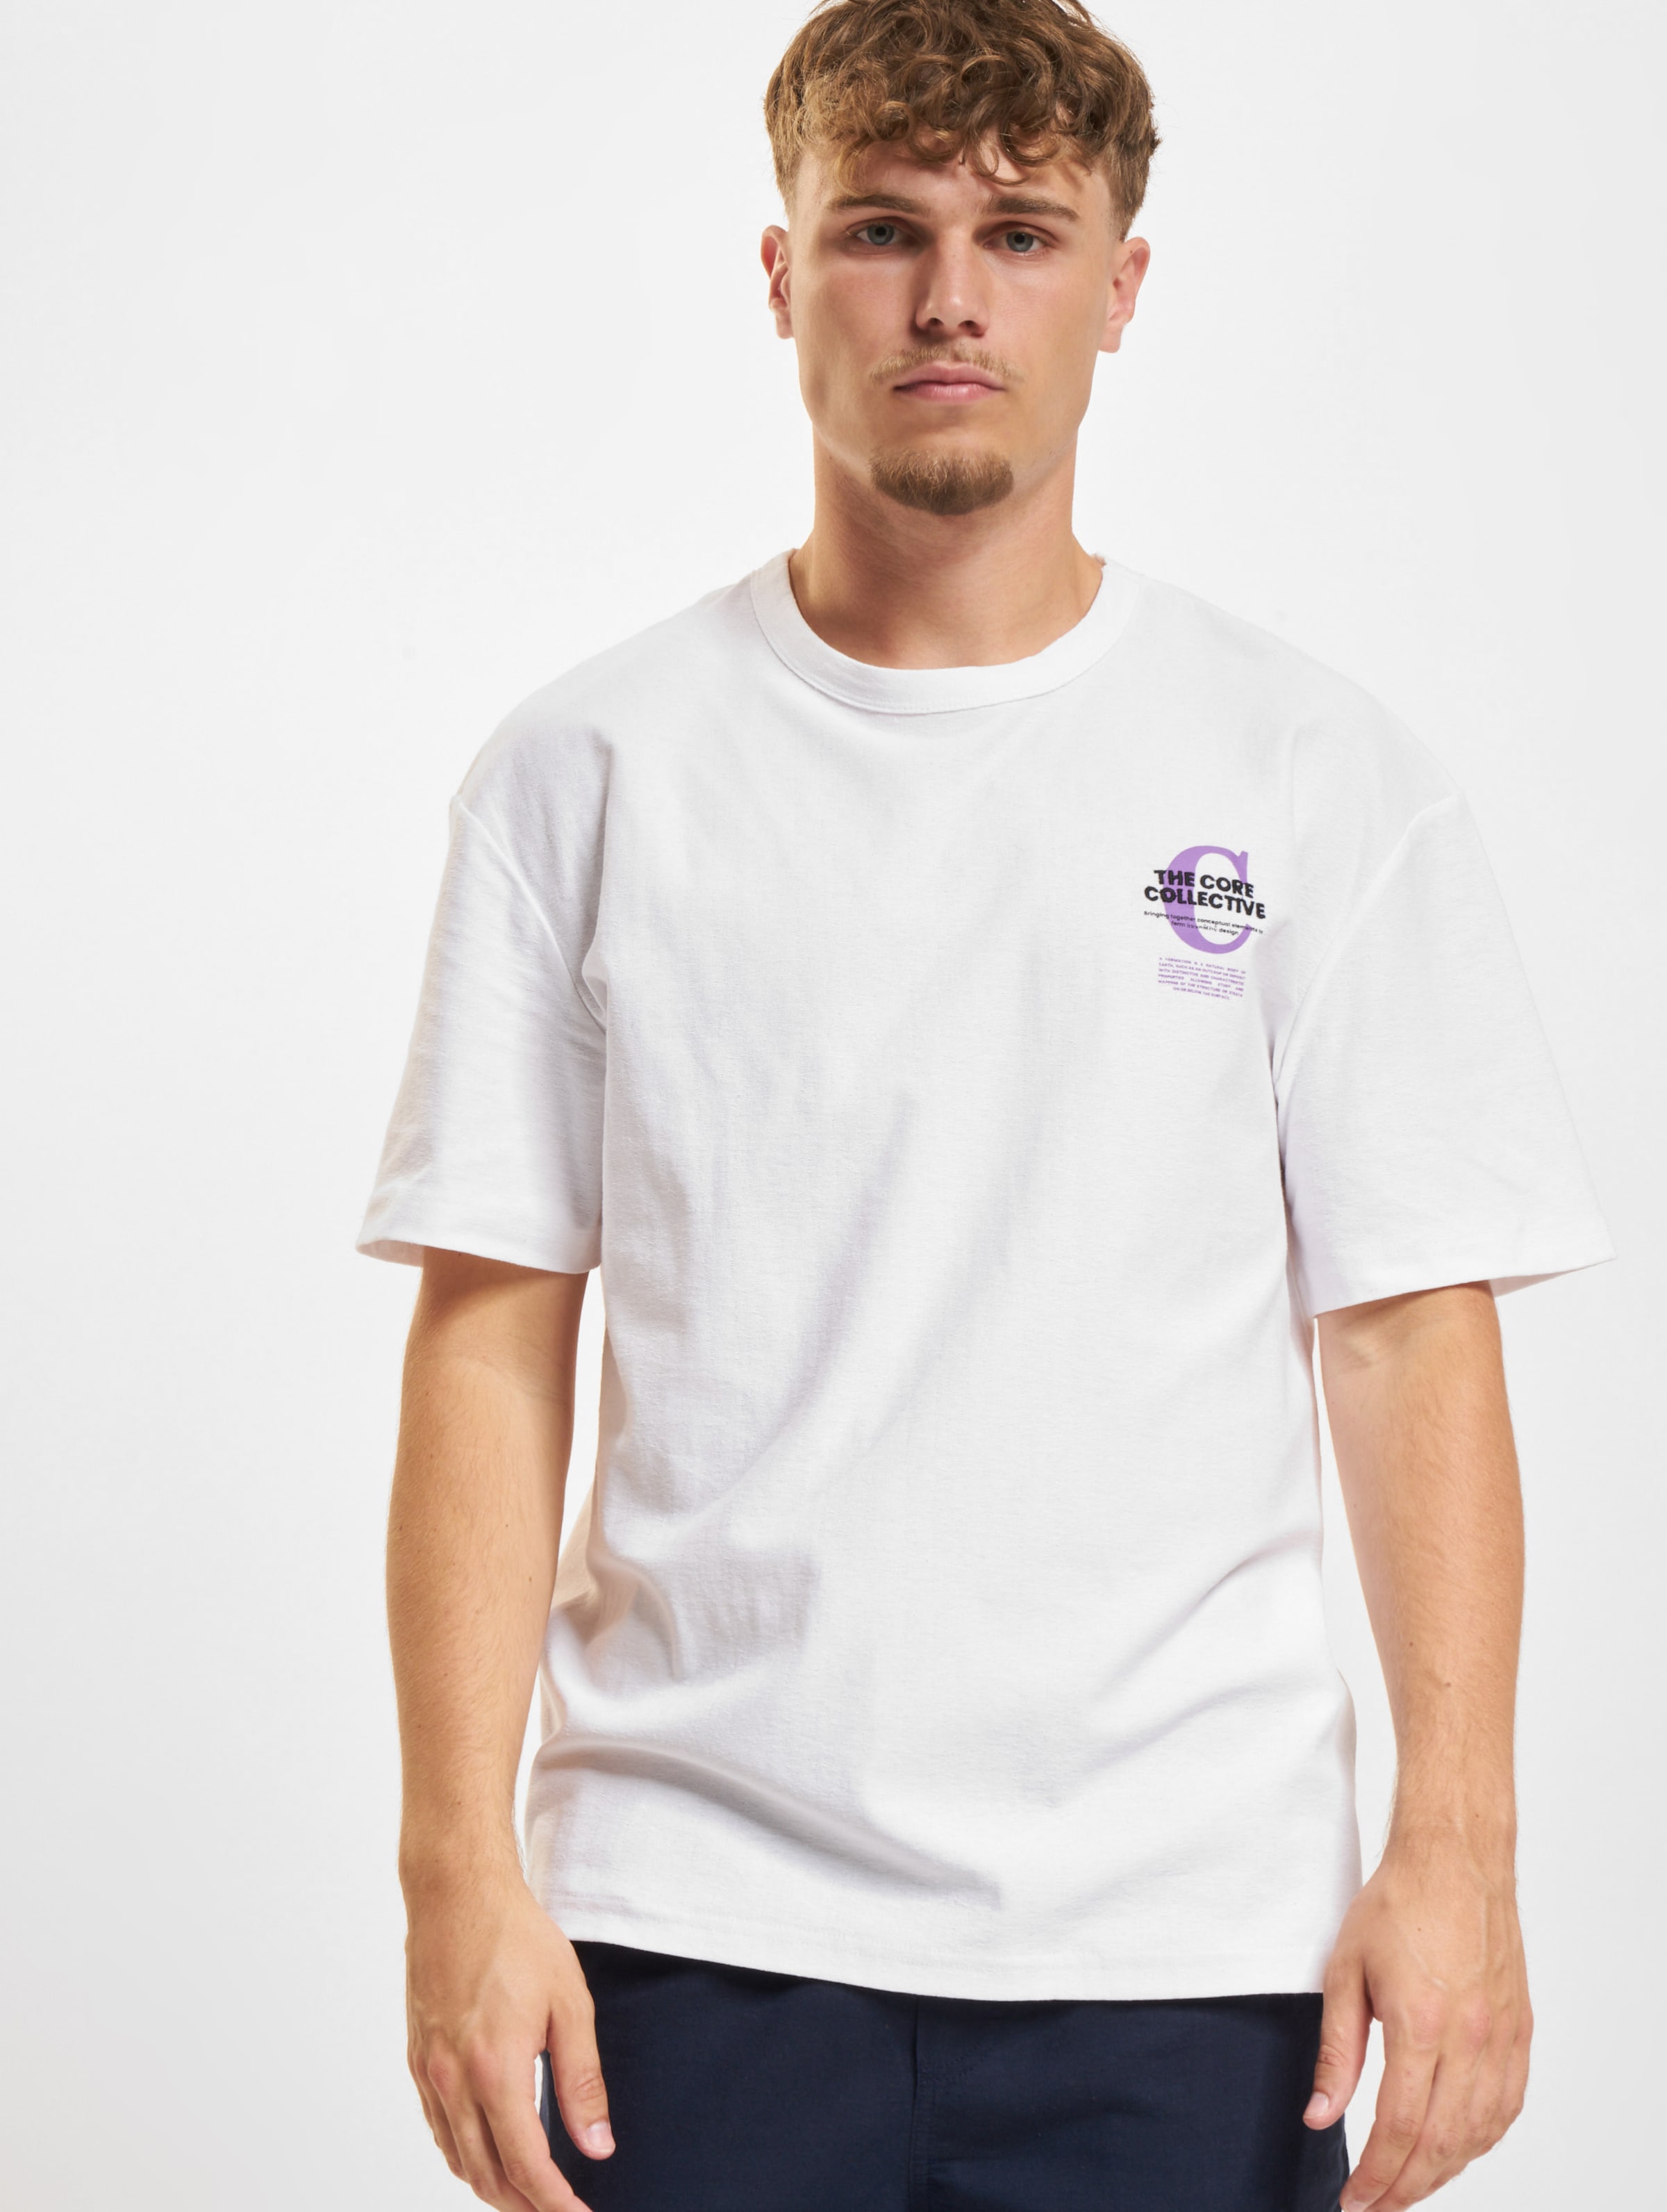 Jack & Jones Holger Crew Neck T-Shirts Männer,Unisex op kleur wit, Maat L